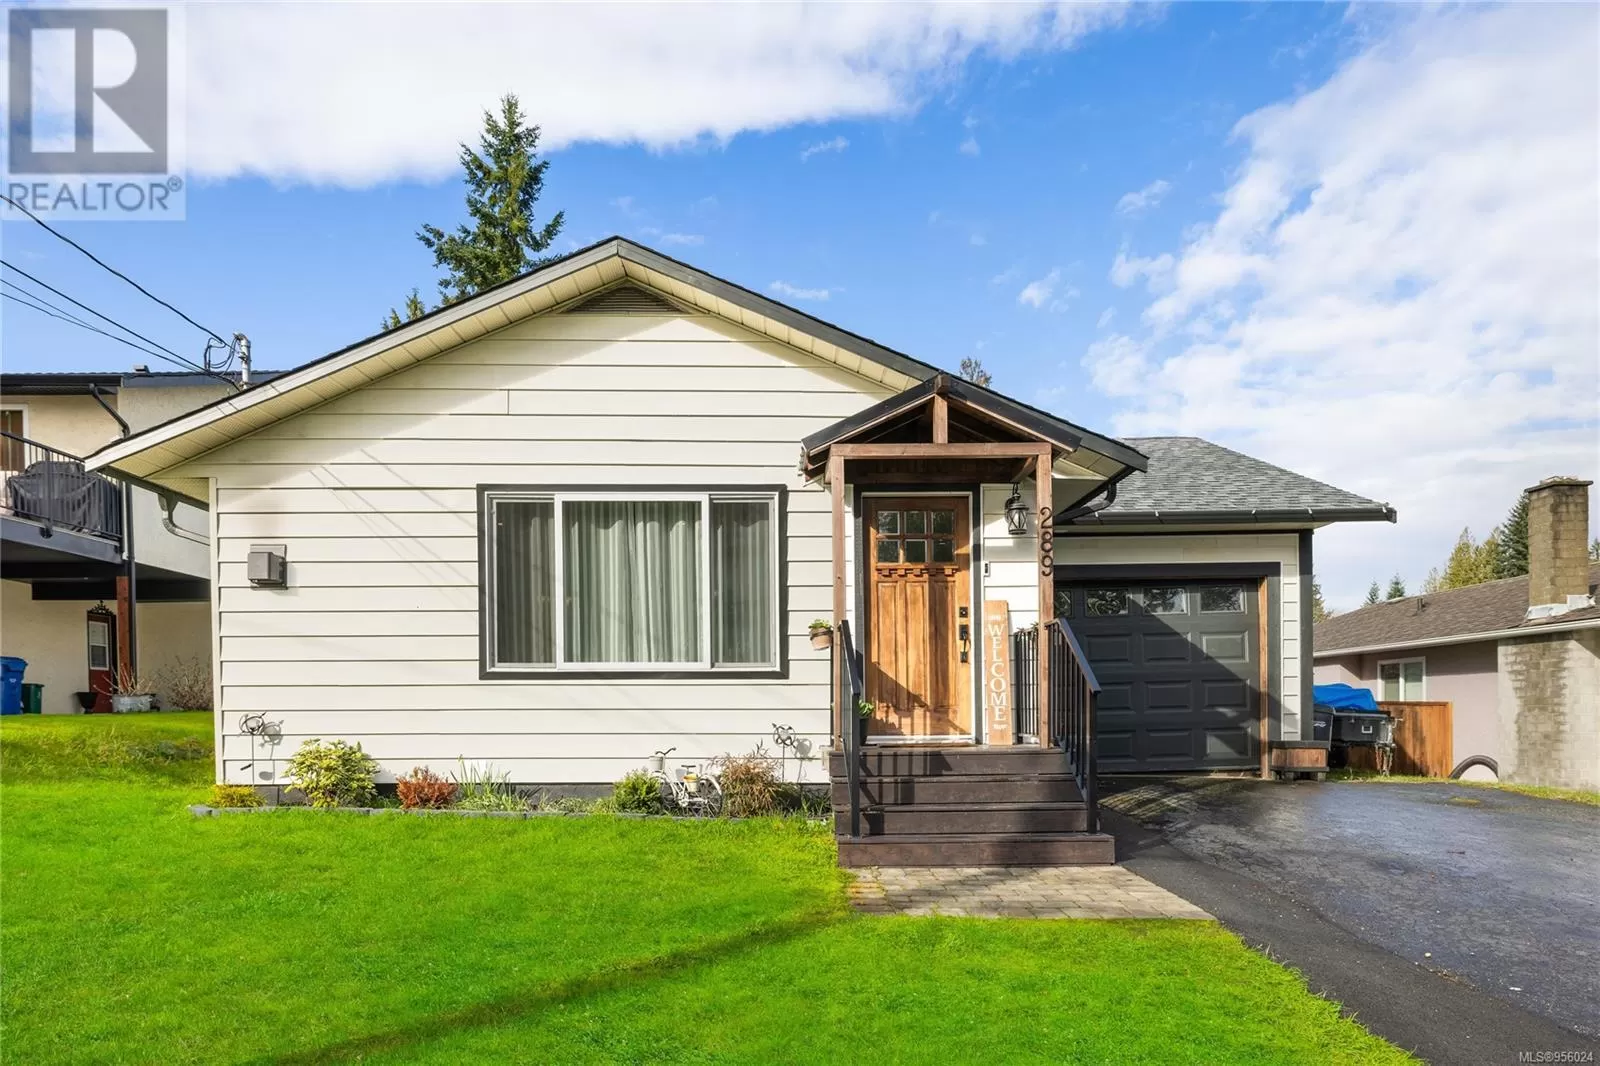 House for rent: 289 Kathryn Pl, Nanaimo, British Columbia V9R 6J1